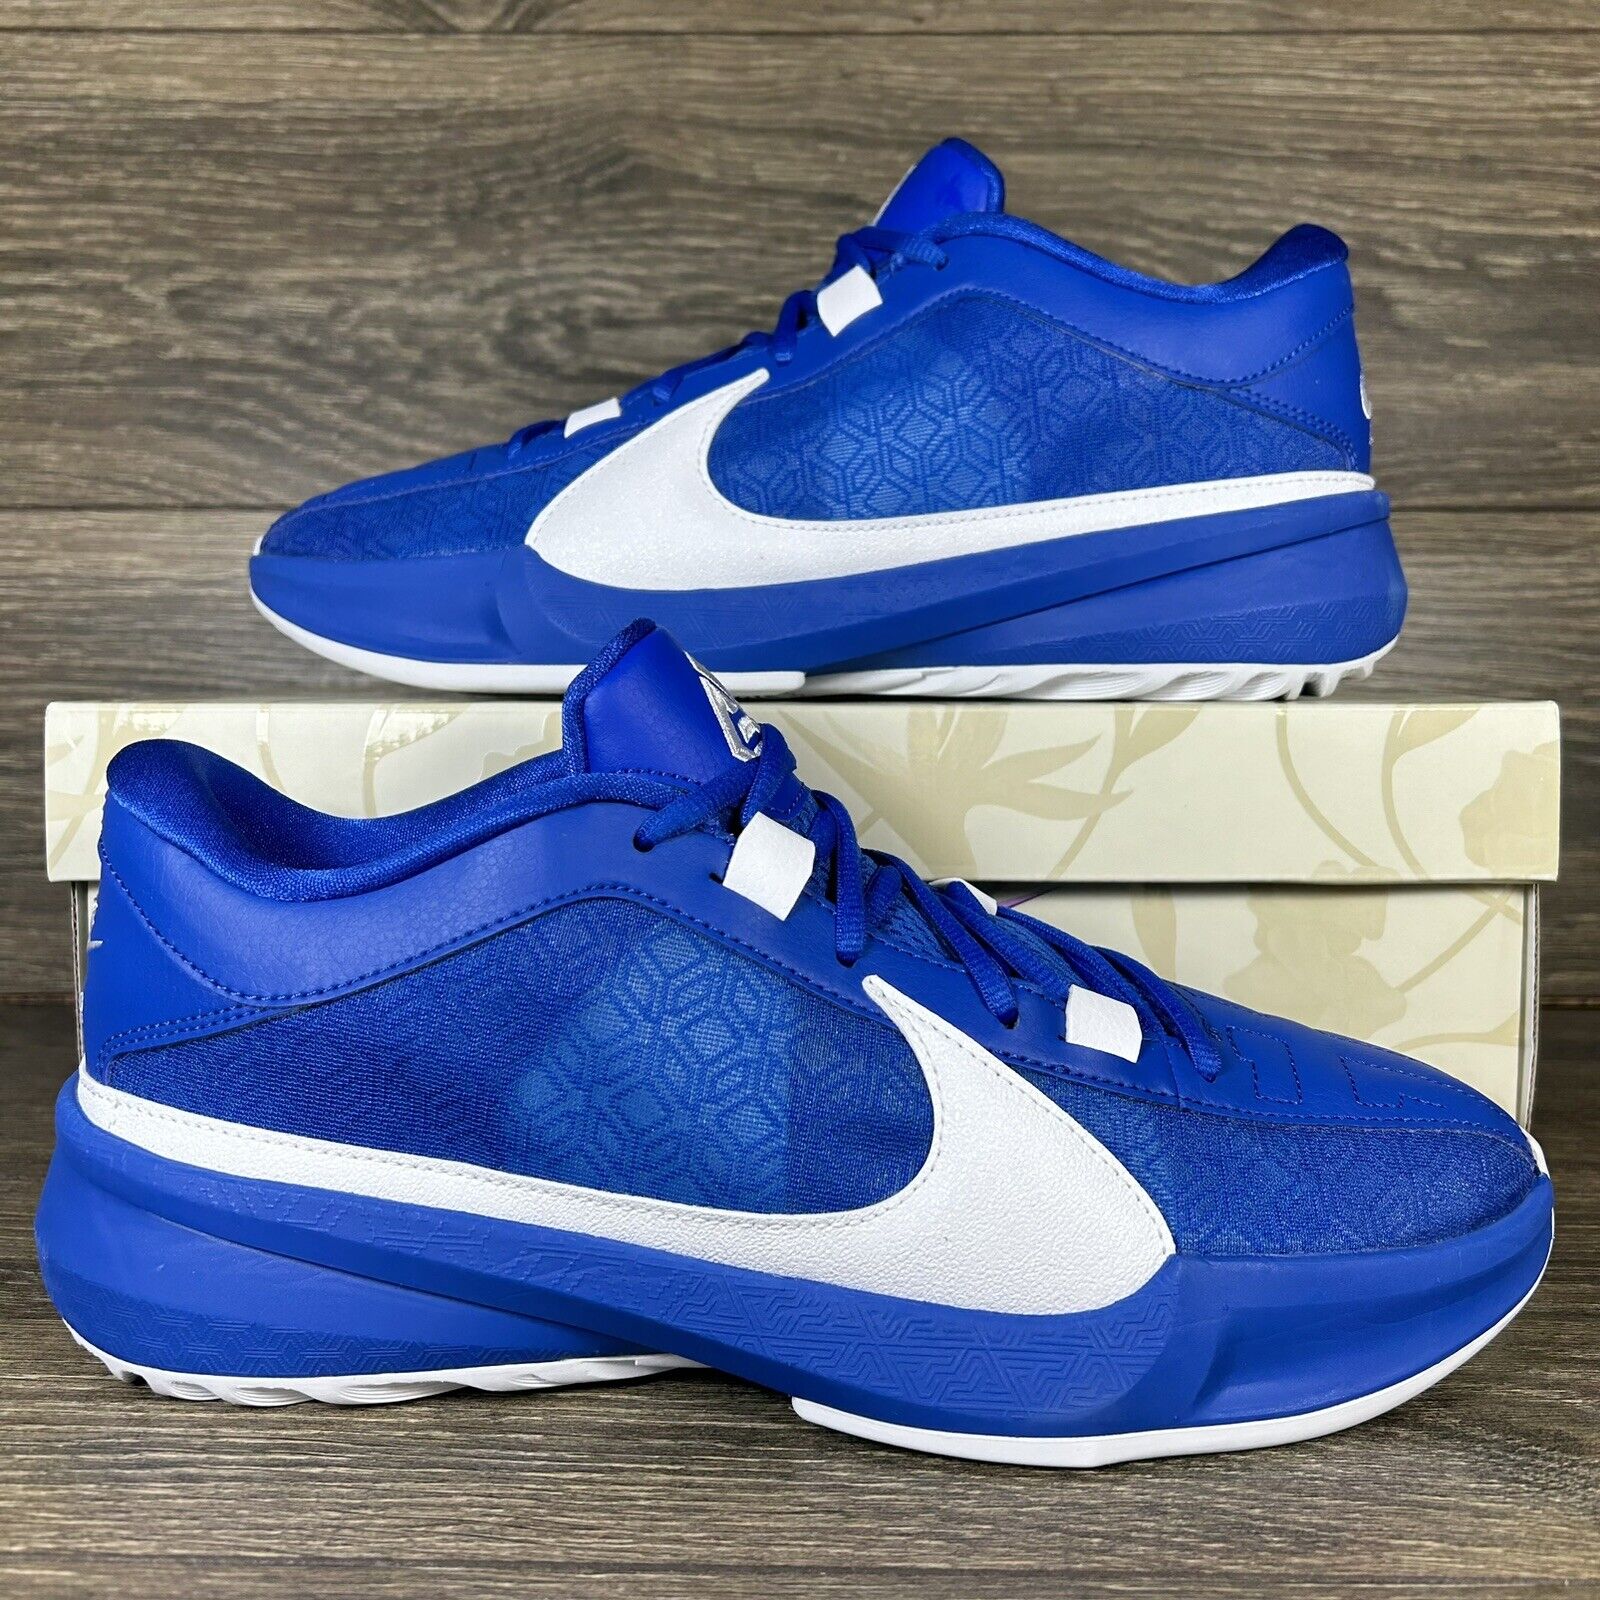 Astonishing Nike Men’s Zoom Freak 5 Blue Athletic Basketball Shoes Sneakers Trainers New on eBay